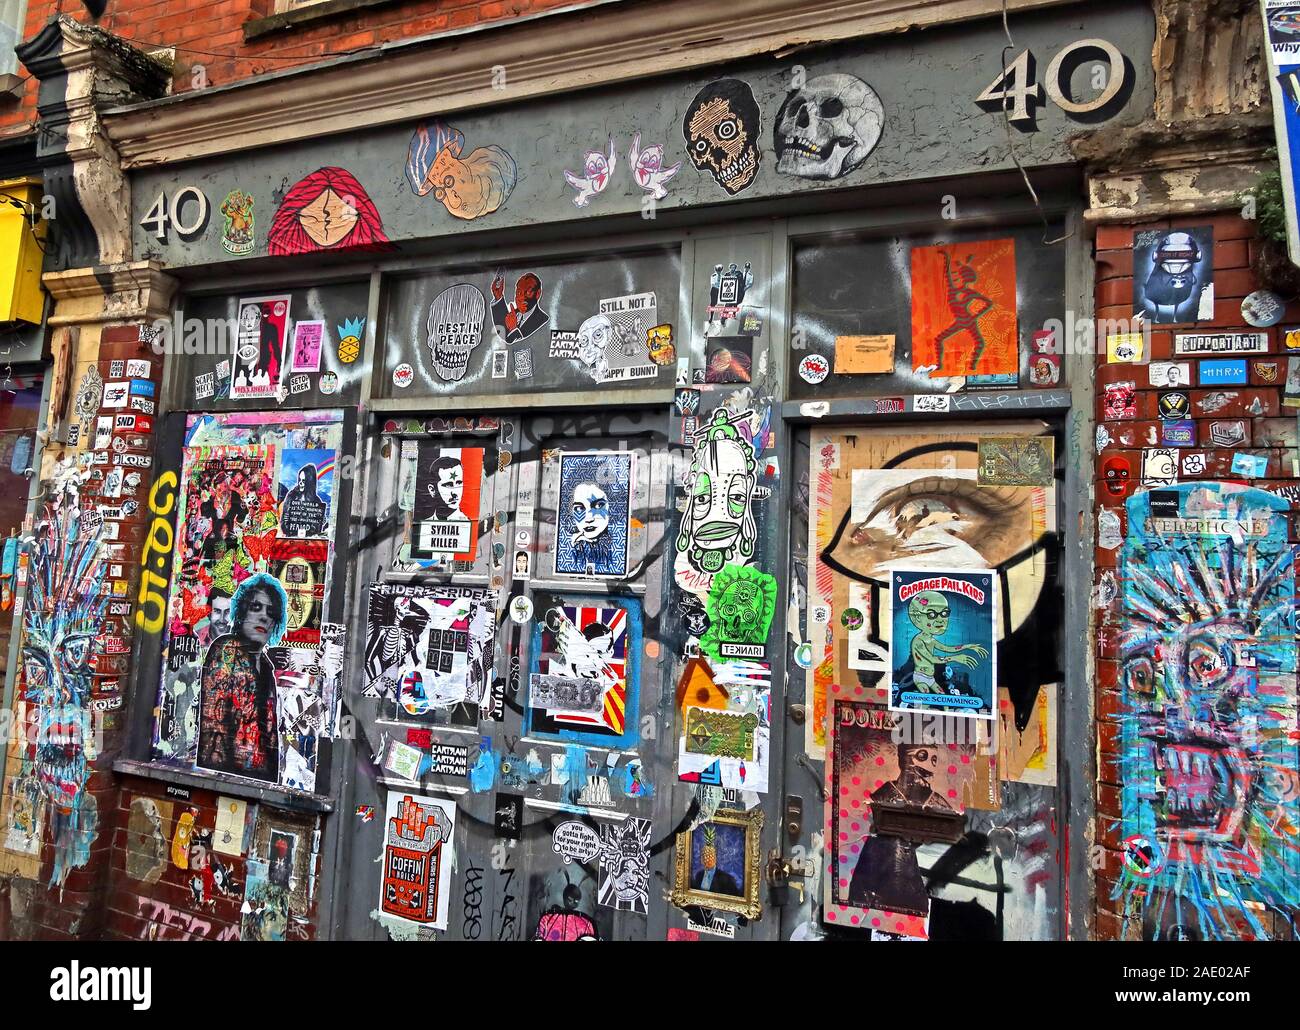 40 Hanbury St,Brick Lane,art and graffiti,Shoreditch,Tower Hamlets,East End,London,South East,England,UK, E1 6QL Stock Photo